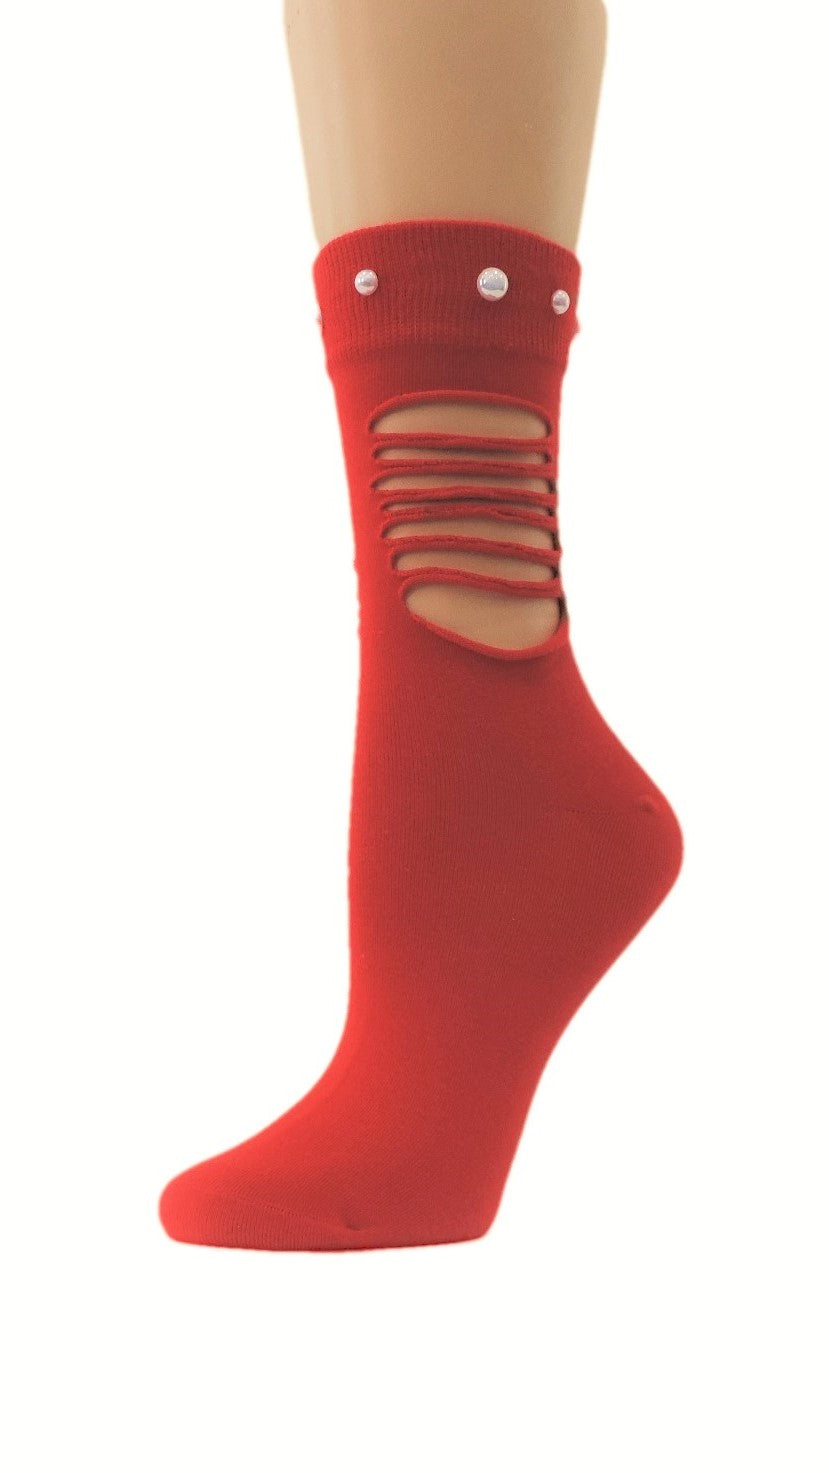 Ripped Bright Red Custom Fashion Socks with Beads - Global Trendz Fashion®